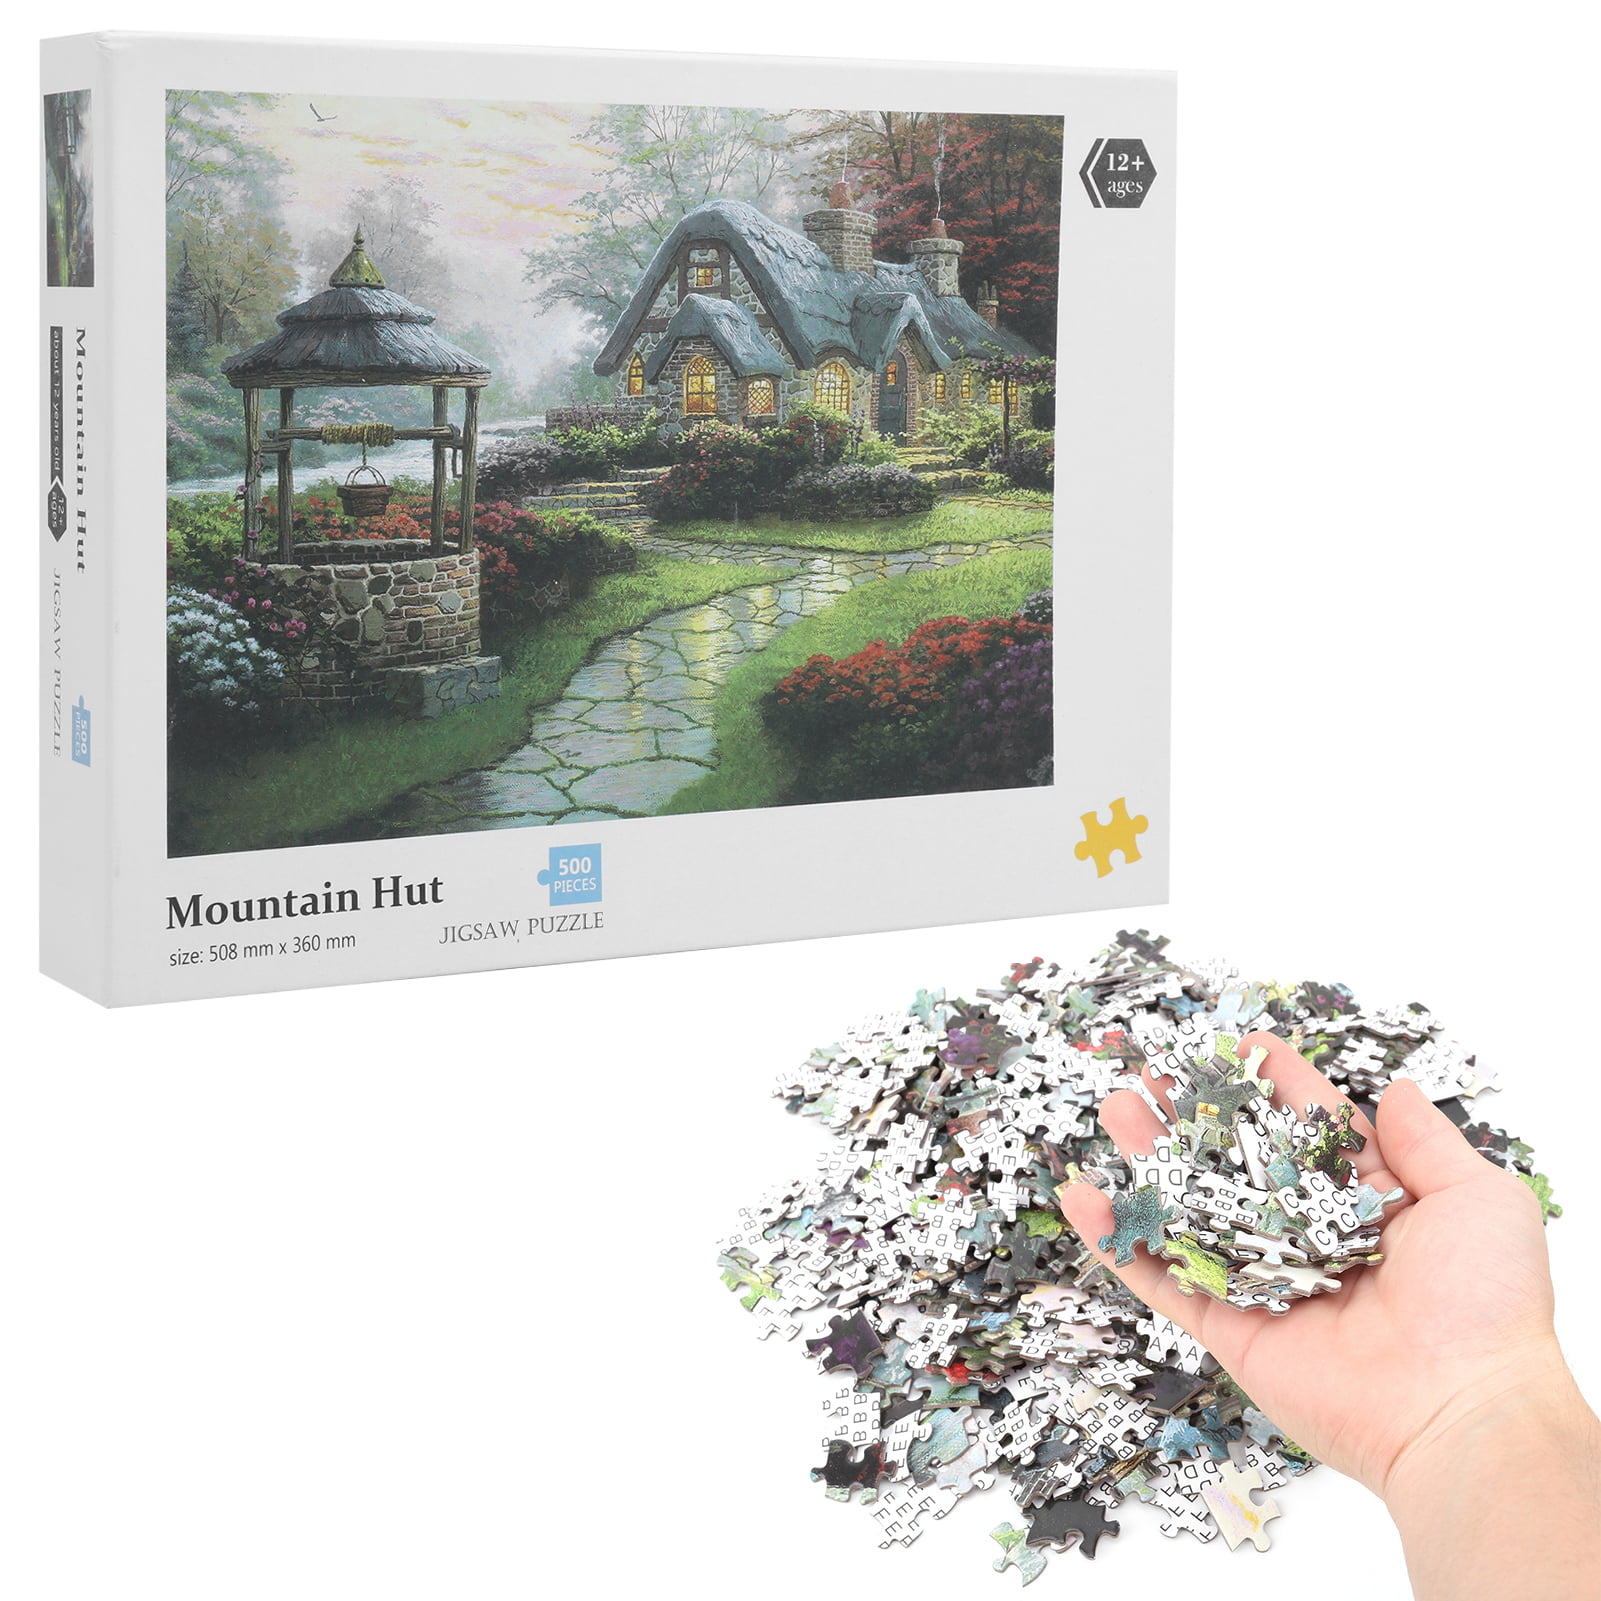 Details about   Adult Jigsaw Puzzle 1000 Pieces-1000 Piece Jigsaw Puzzle-Jigsaw Puzzle Children 